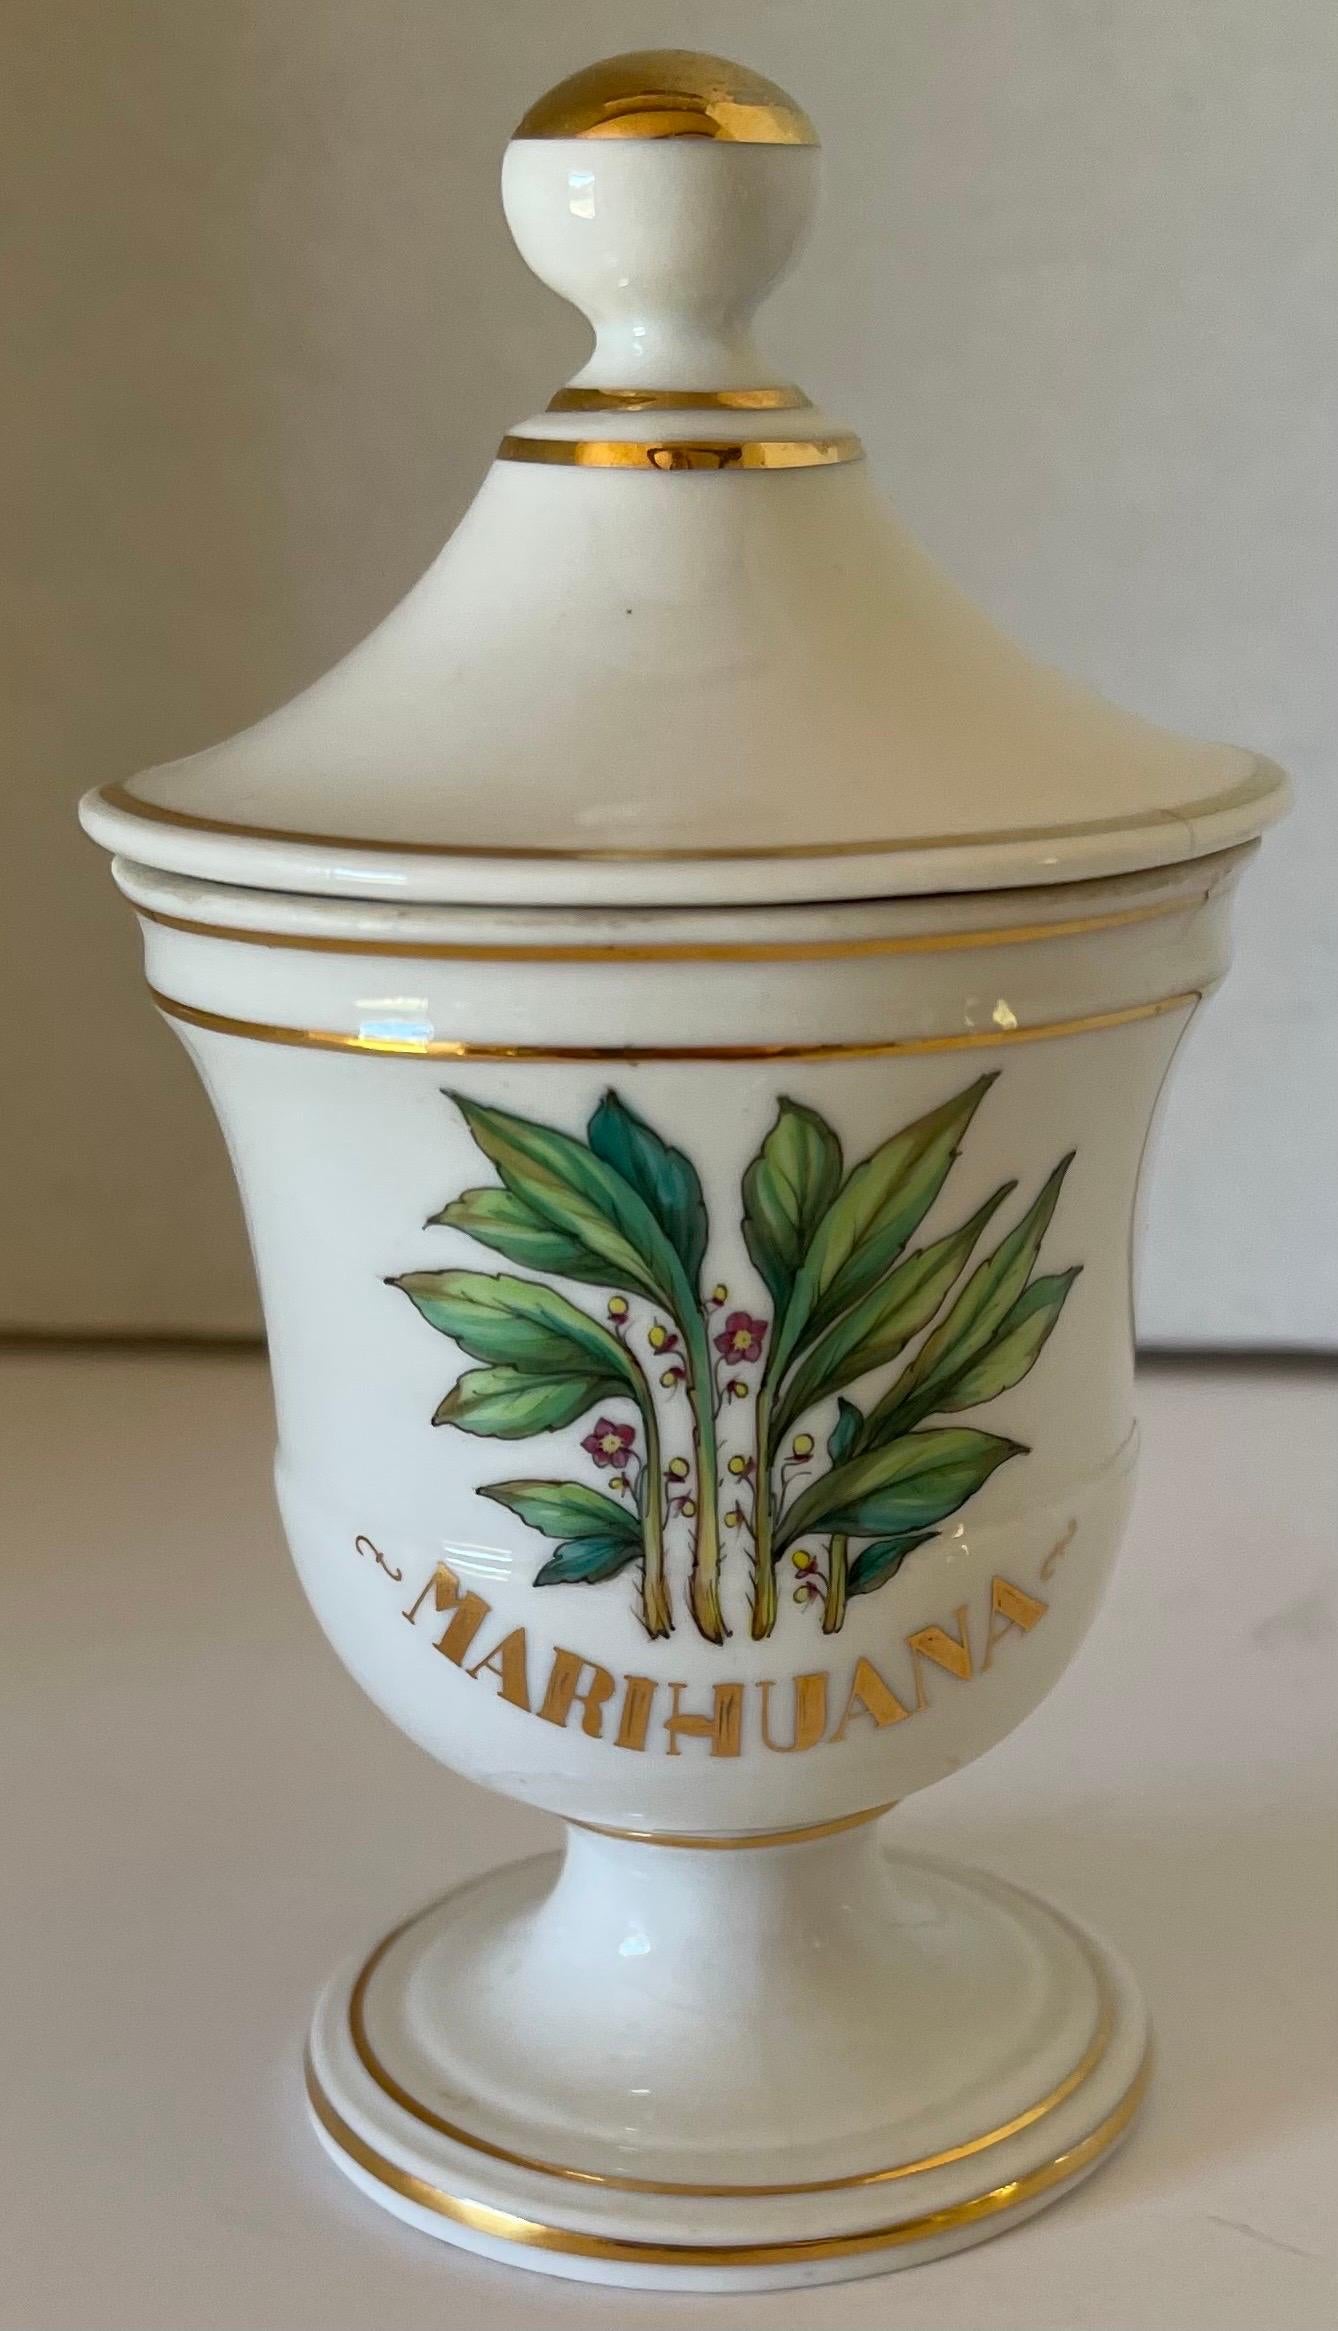 Limoges Marihuana porcelain gold rim apothecary jar. Signed on the underside.